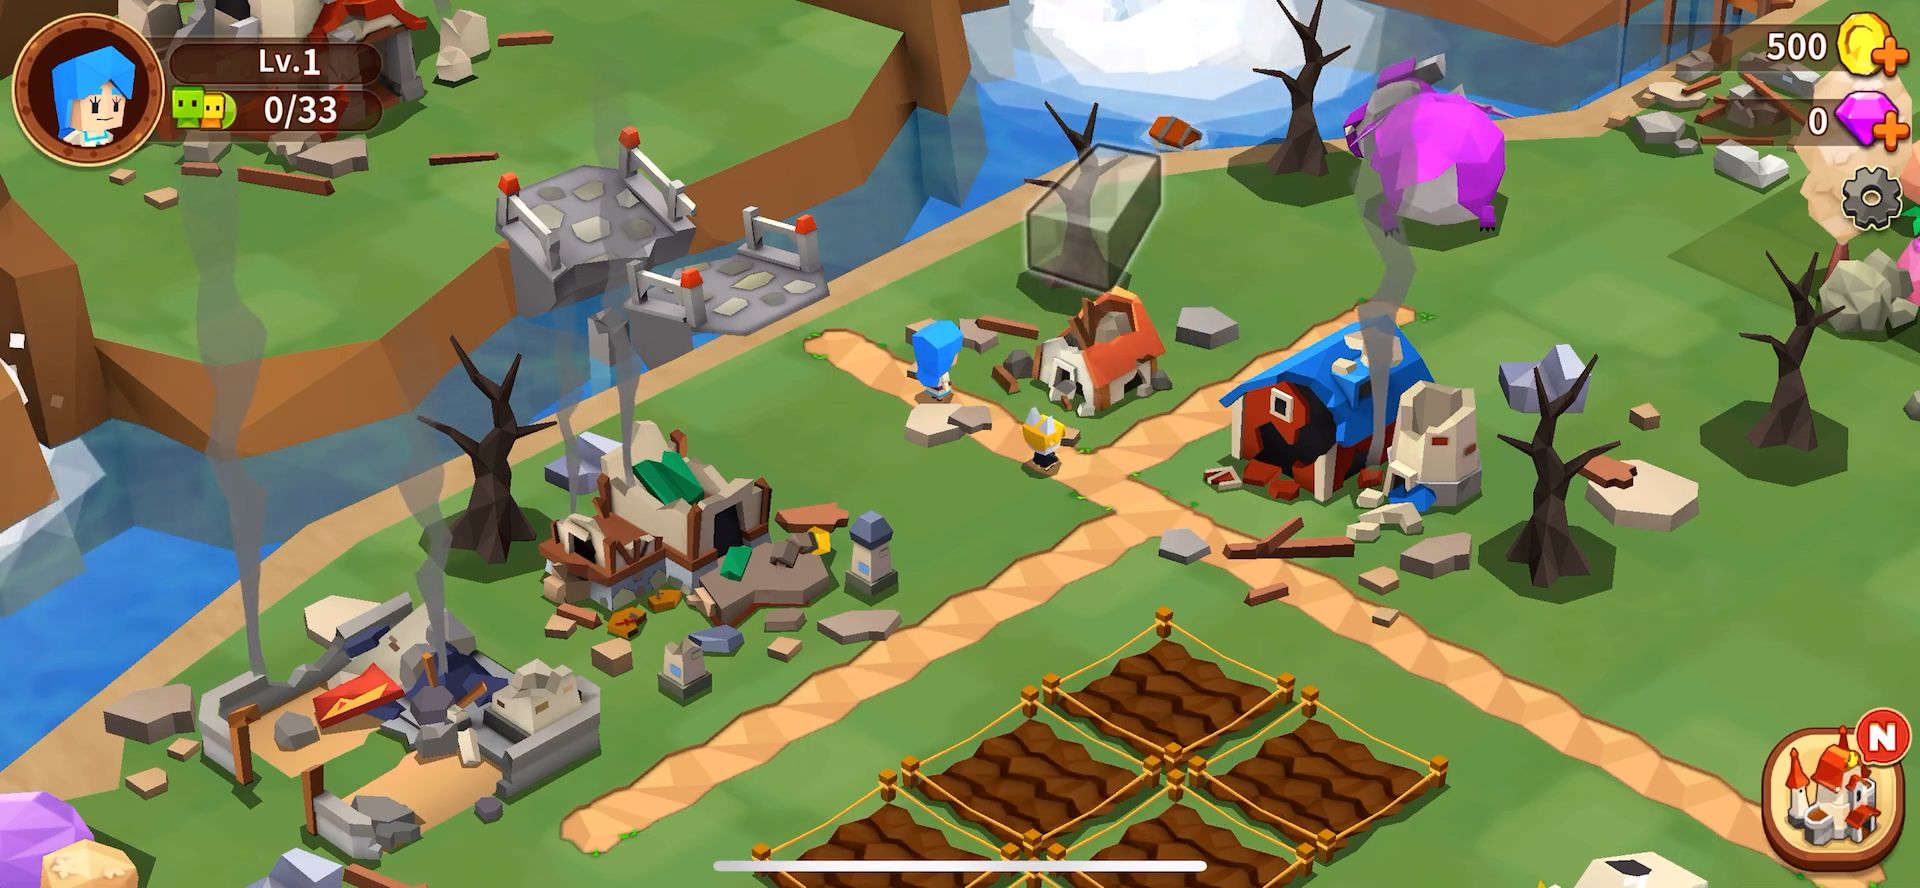 Baixar Garena Fantasy Town - Farm Sim para Android grátis.